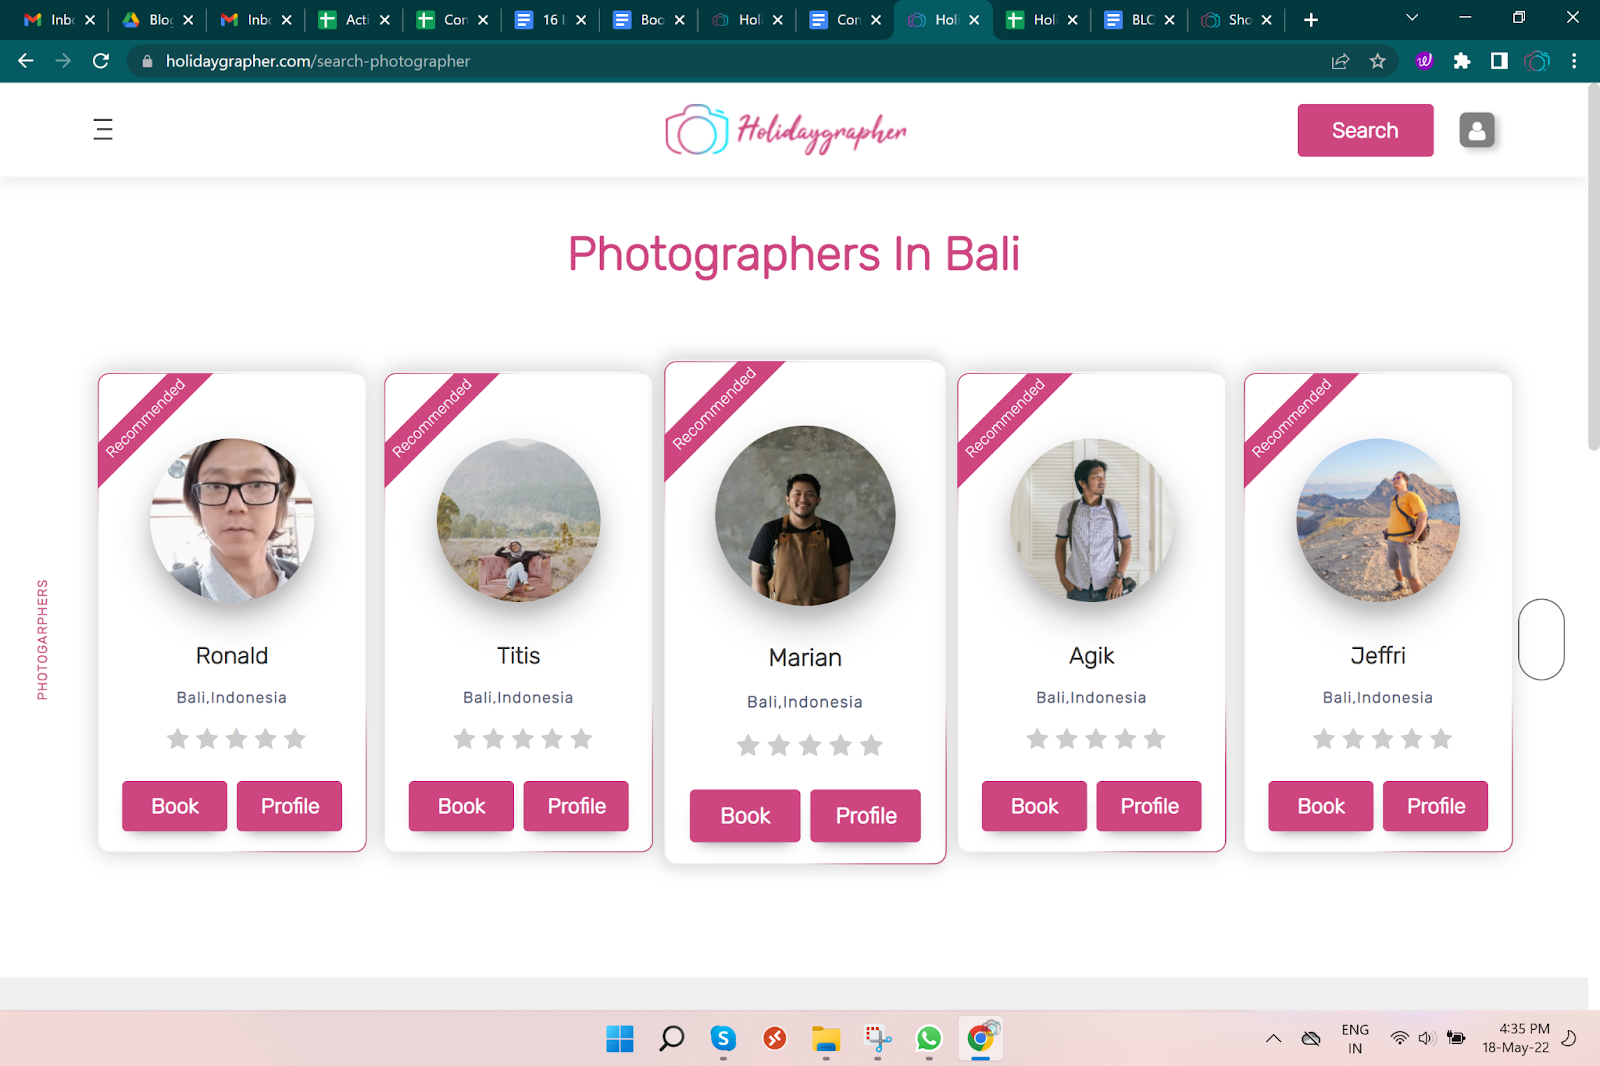 Holidaygrapher's photographers in Bali